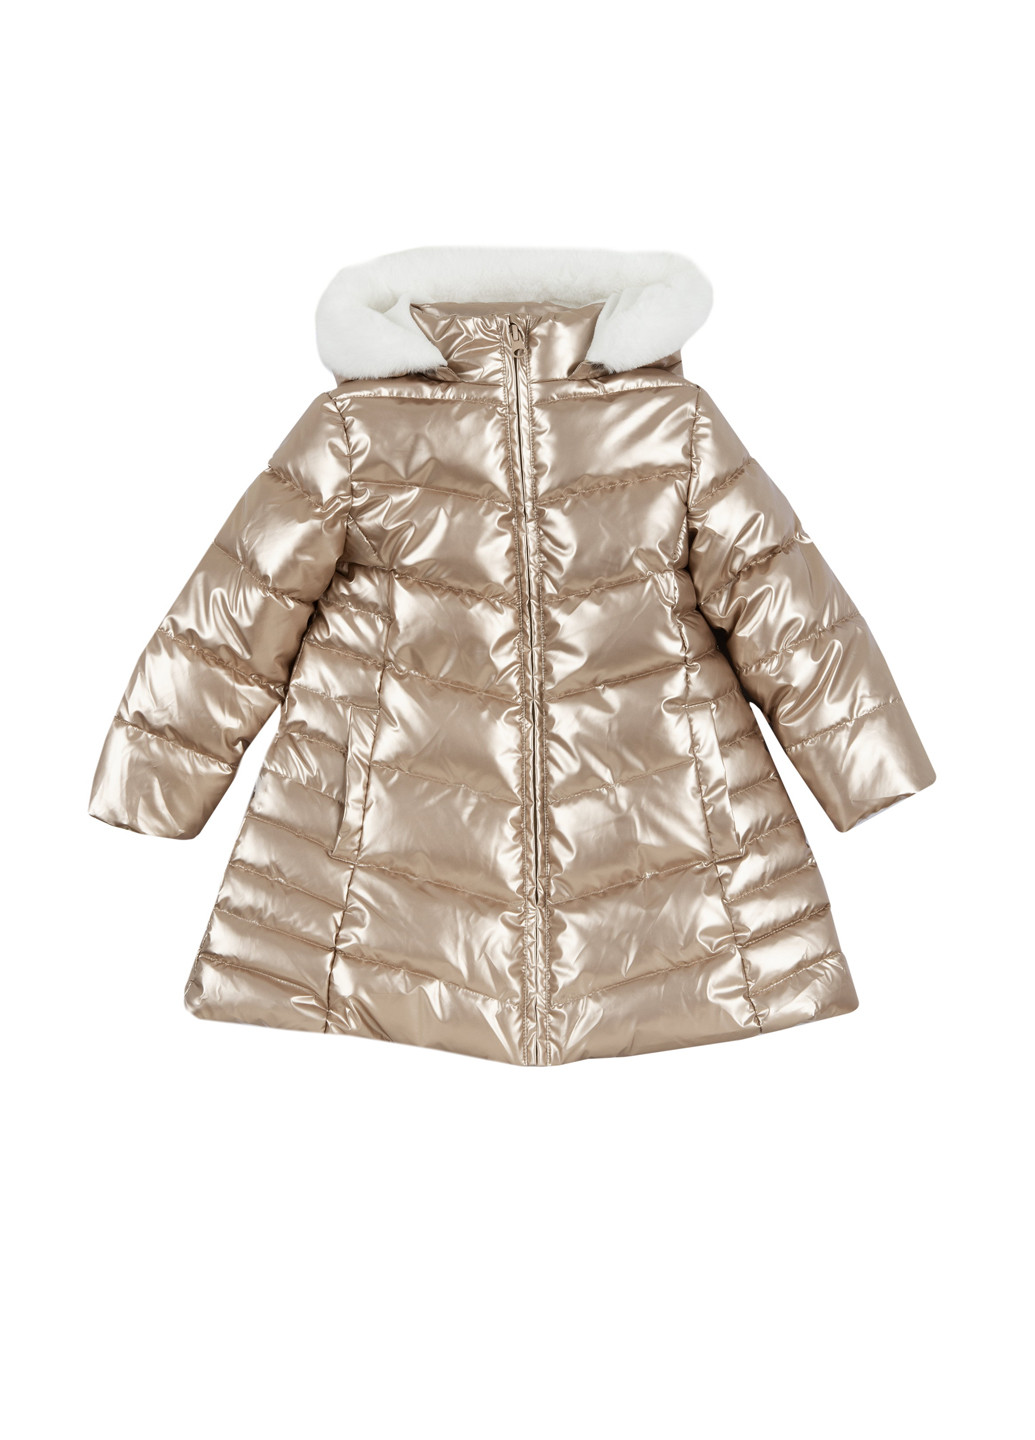 Бежевая зимняя куртка куртка-пальто Chicco